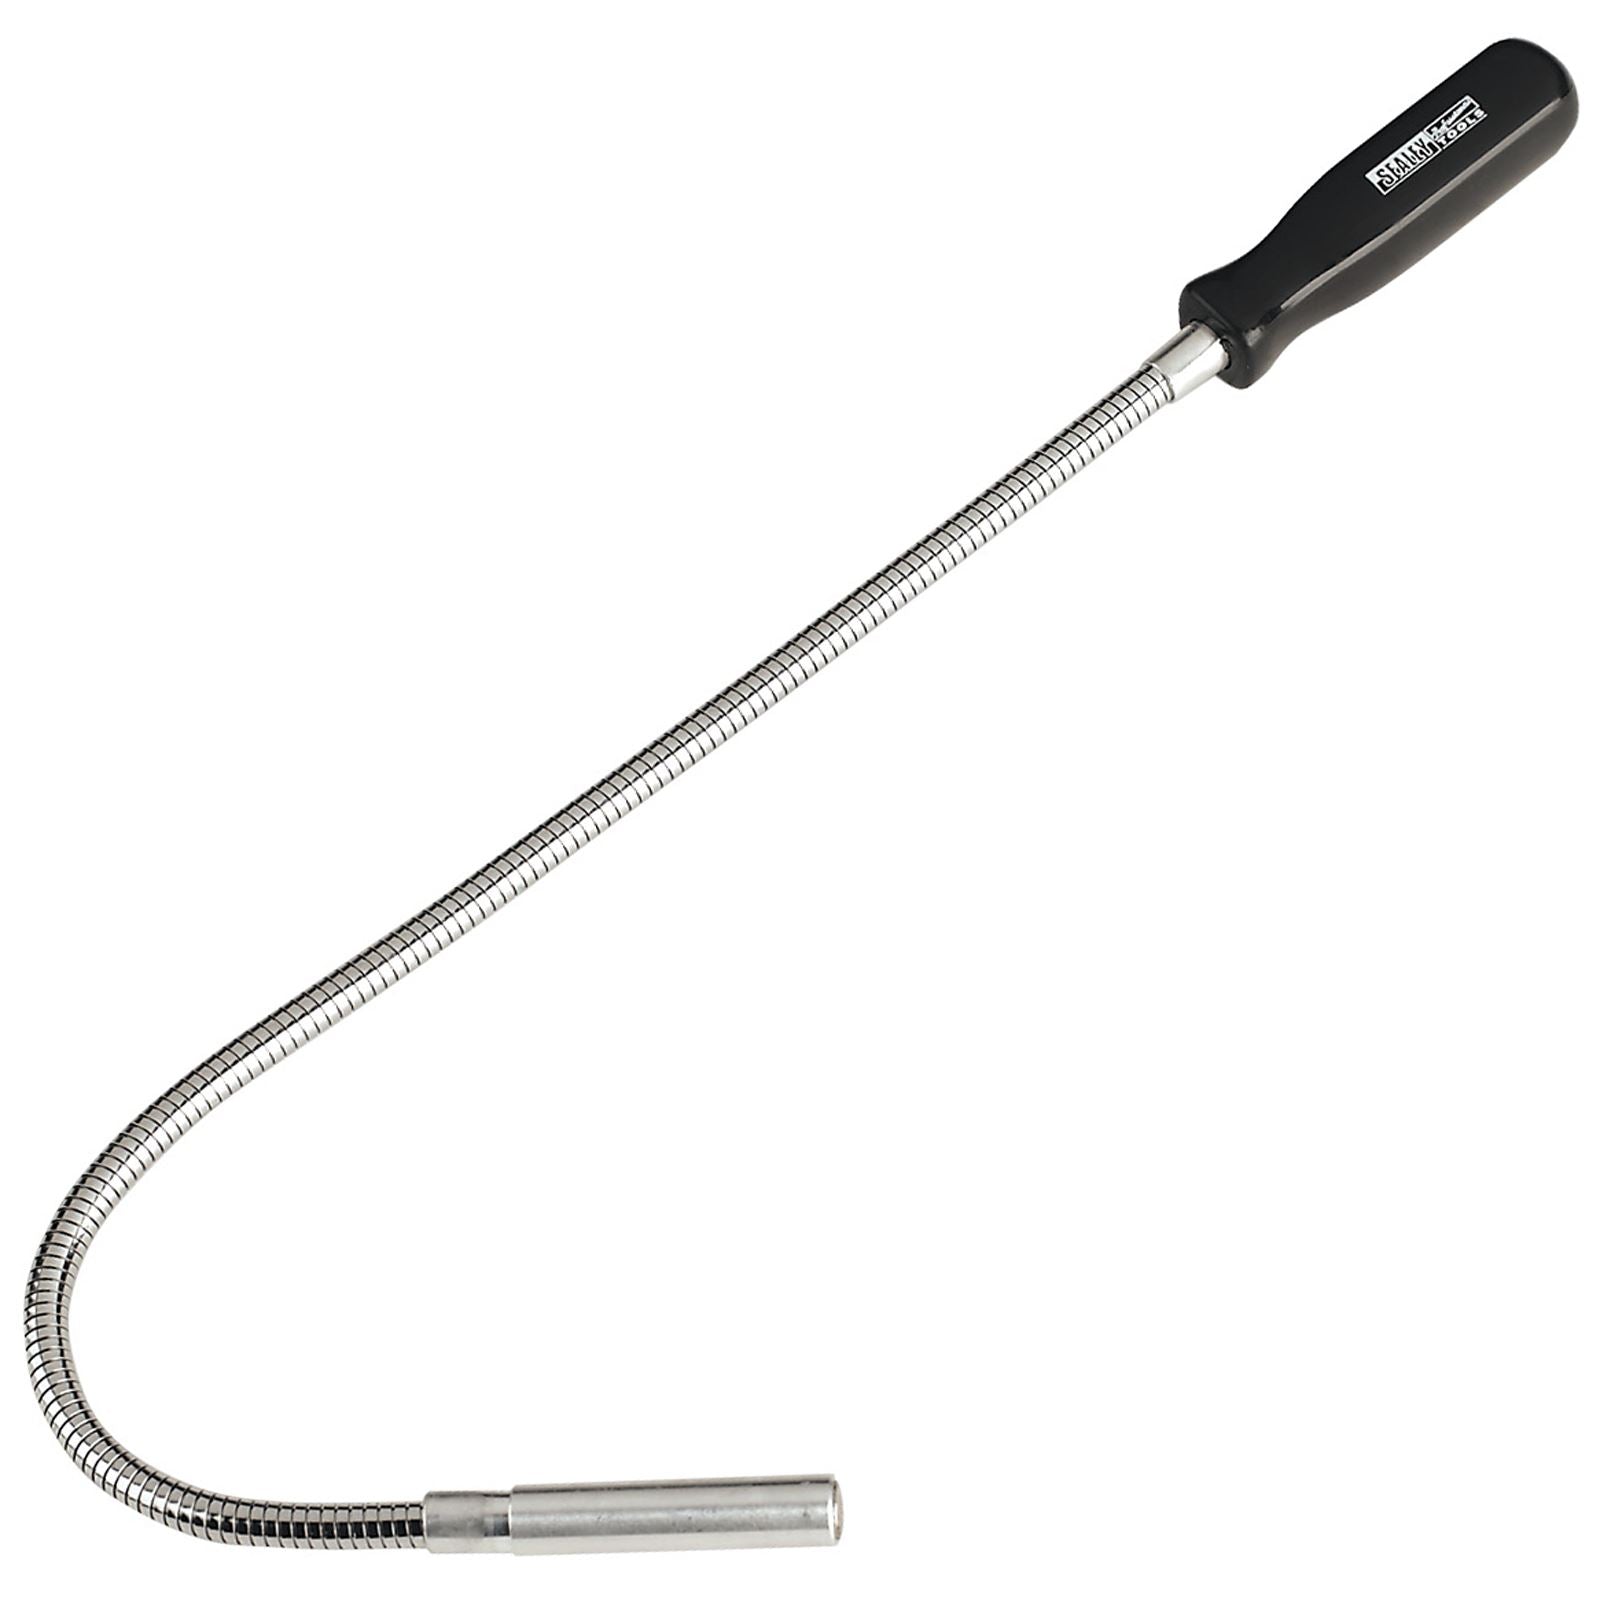 Sealey Premier 1.5kg Flexible Magnetic Pick Up Tool